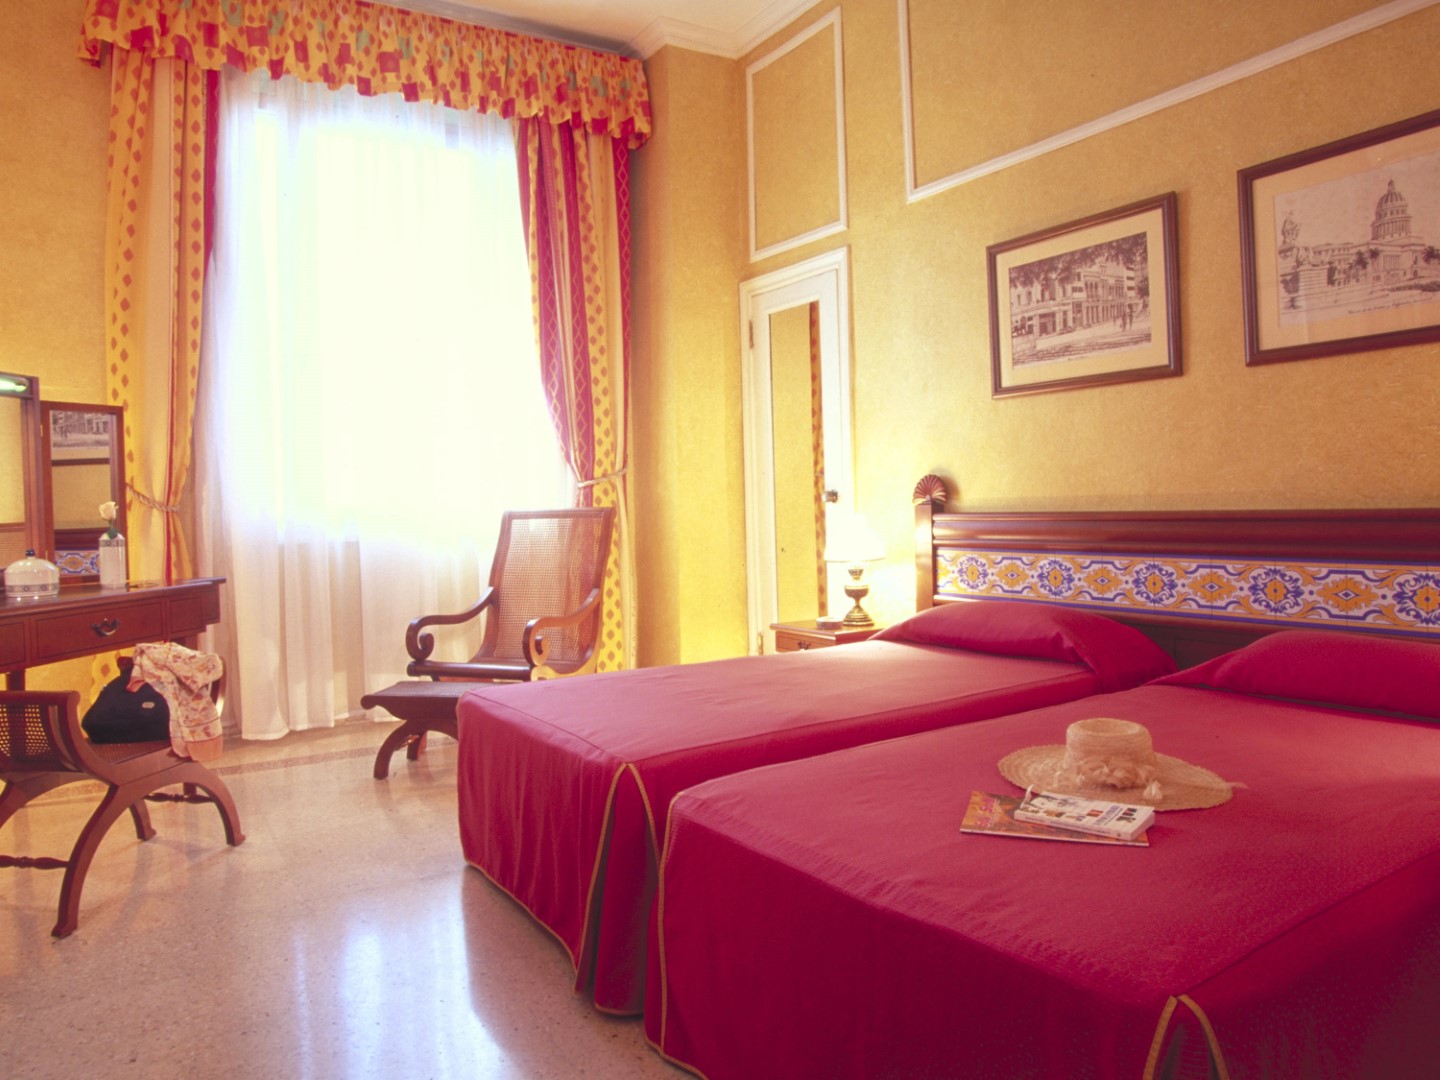 Twin room at the Hotel Sevilla in Havana